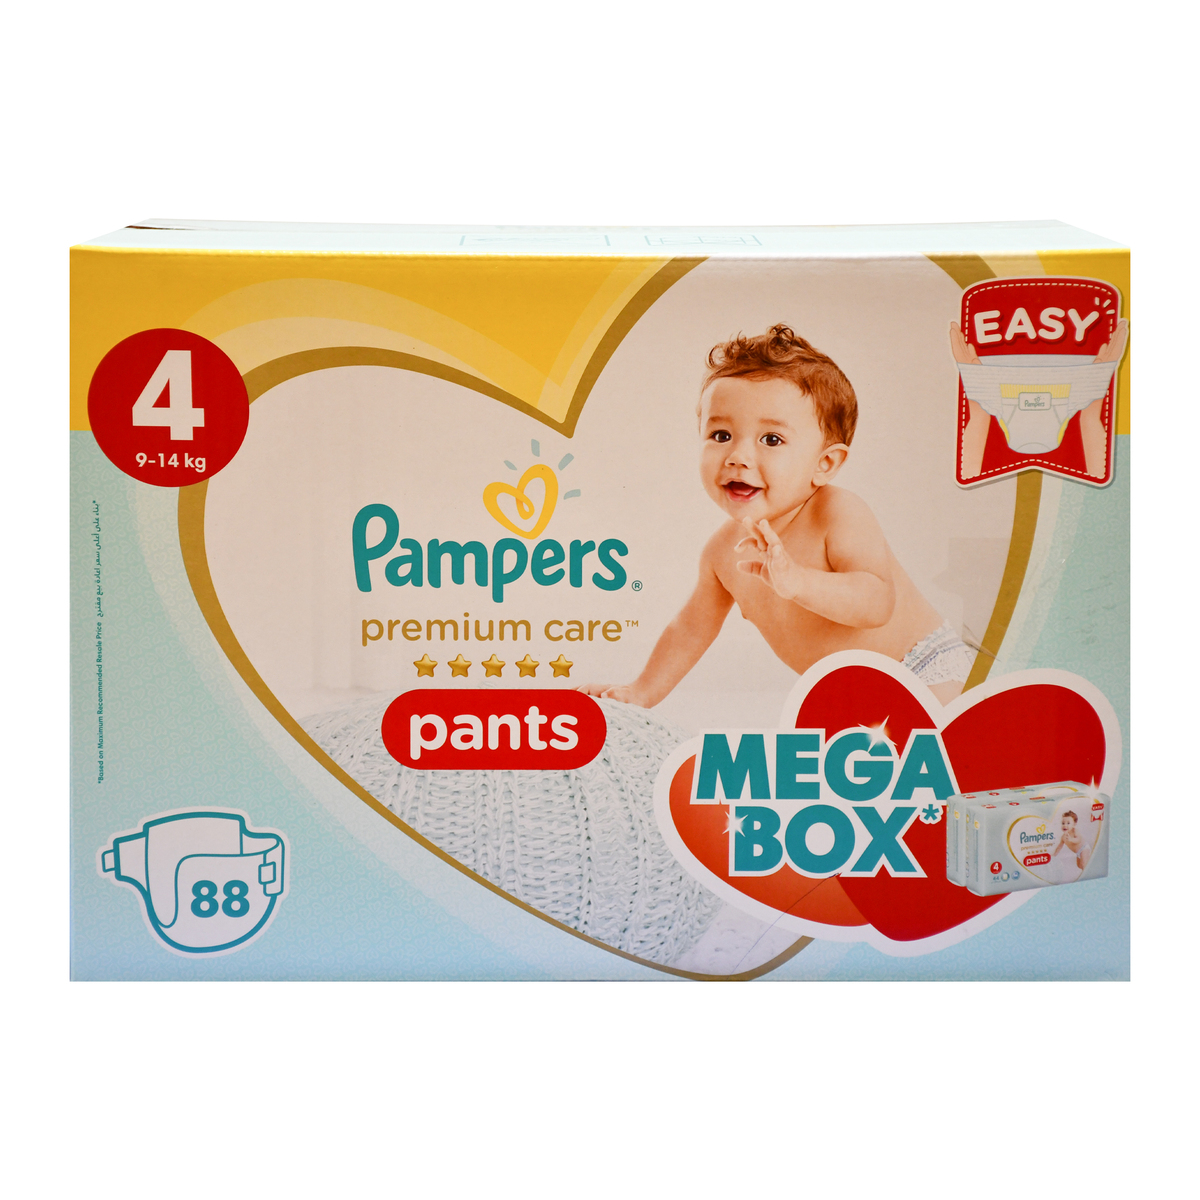 Buy Pampers Diaper Pants Size 4 9-14kg Mega Box 88 pcs Online at Best Price | Baby Trainer Pants | Lulu Kuwait in Kuwait